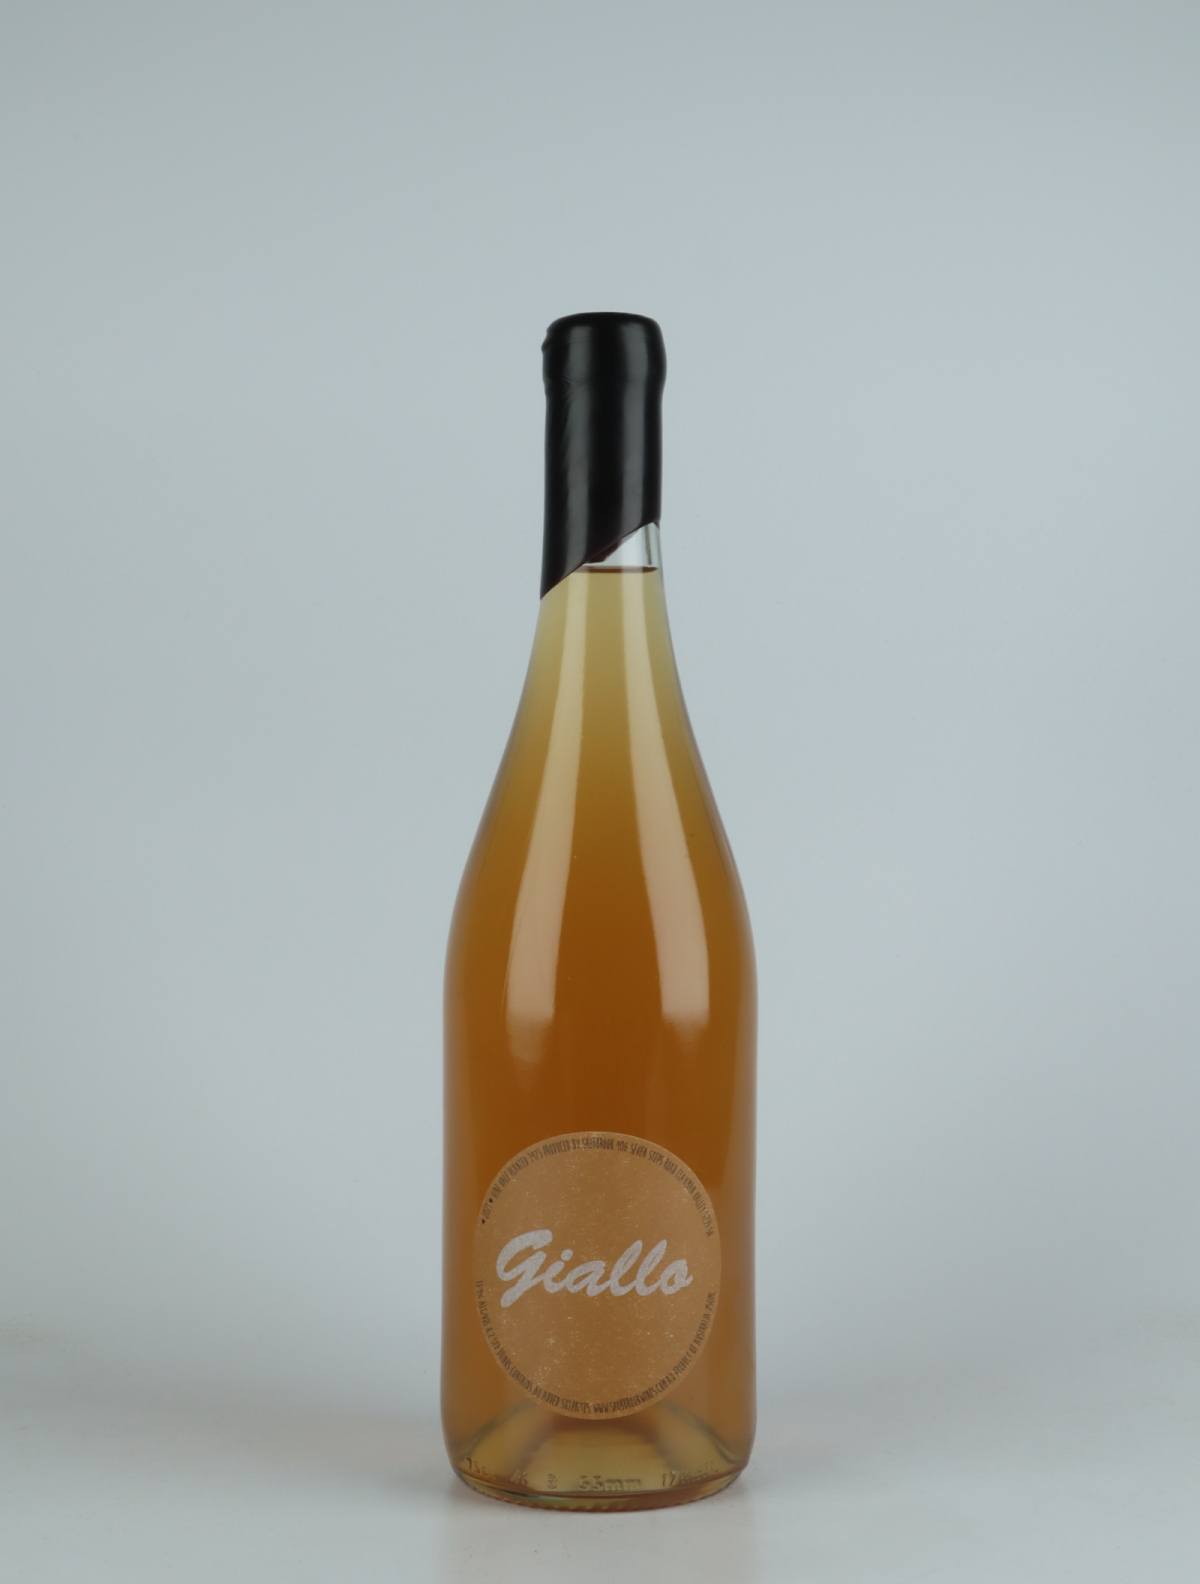 A bottle 2021 Giallo Orange wine from Tom Shobbrook, Barossa Valley in 